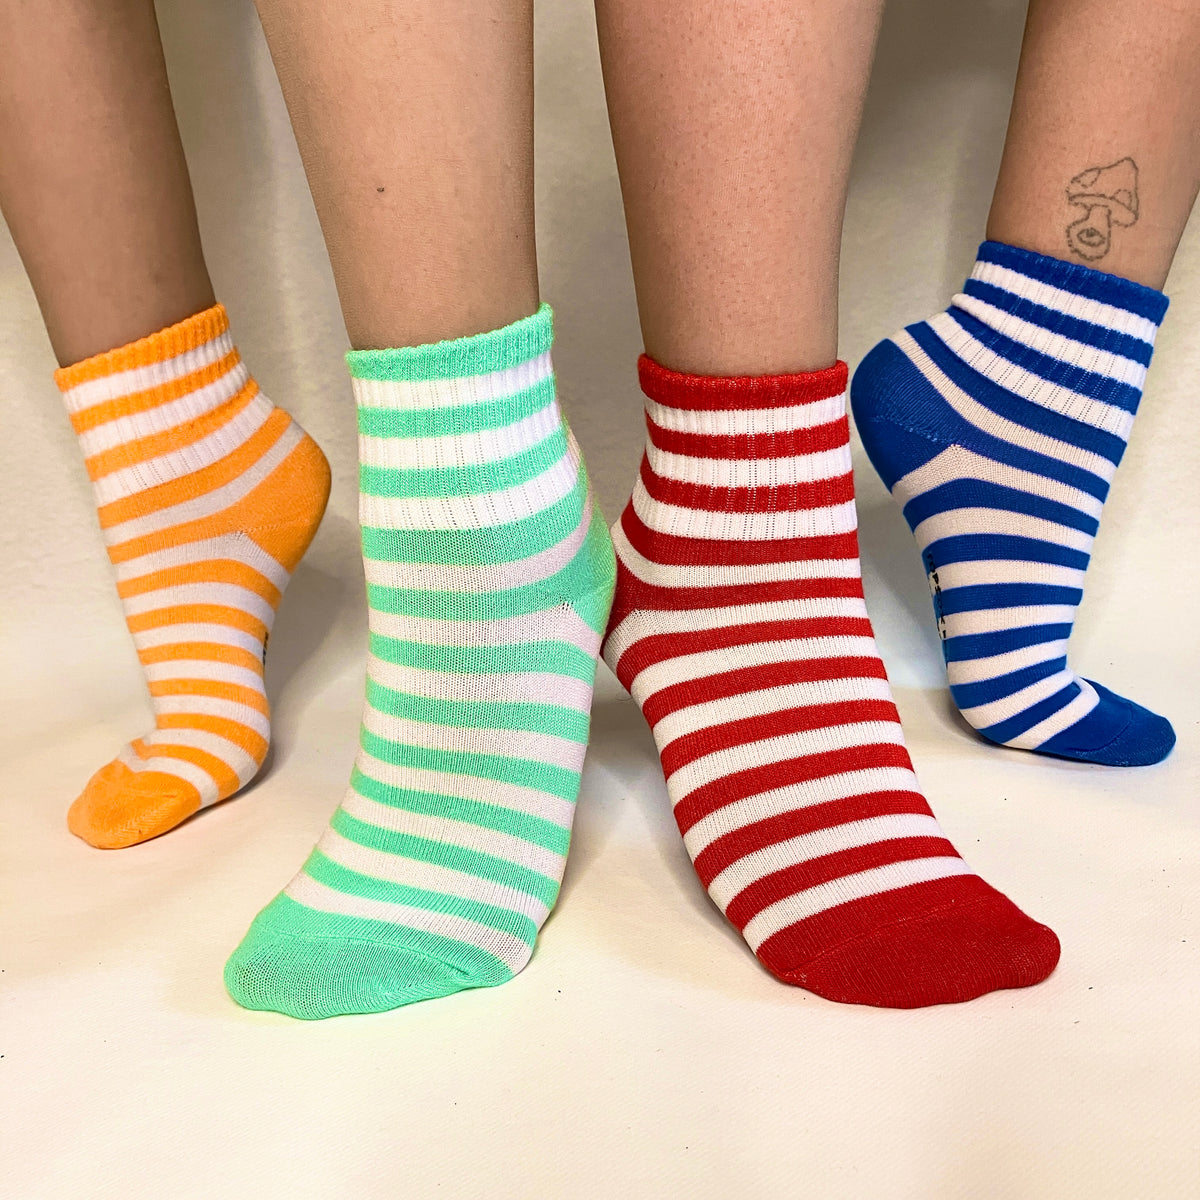 Anklets - Orange/White striped